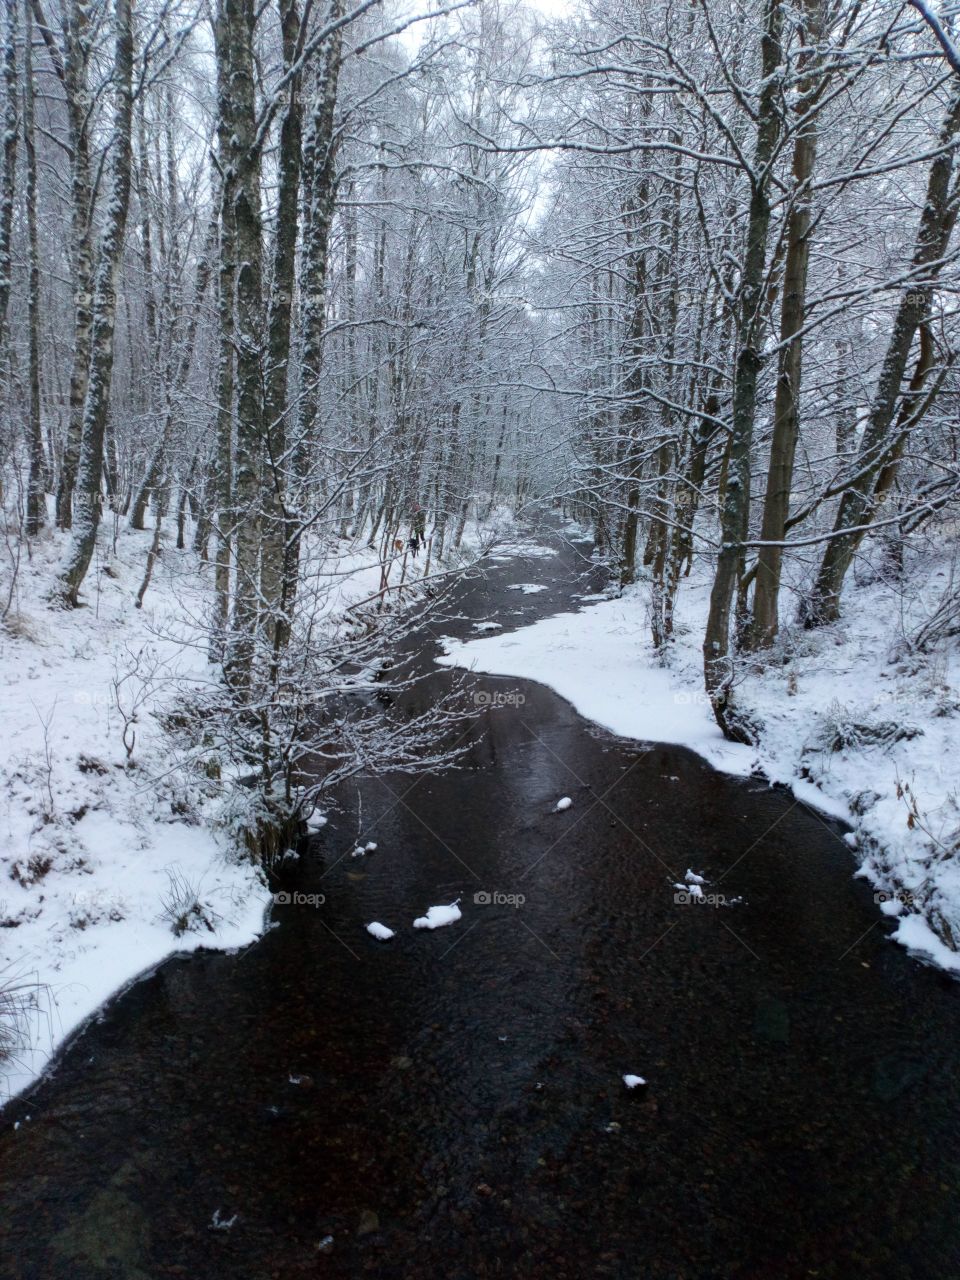 Snowy Scottish scenery